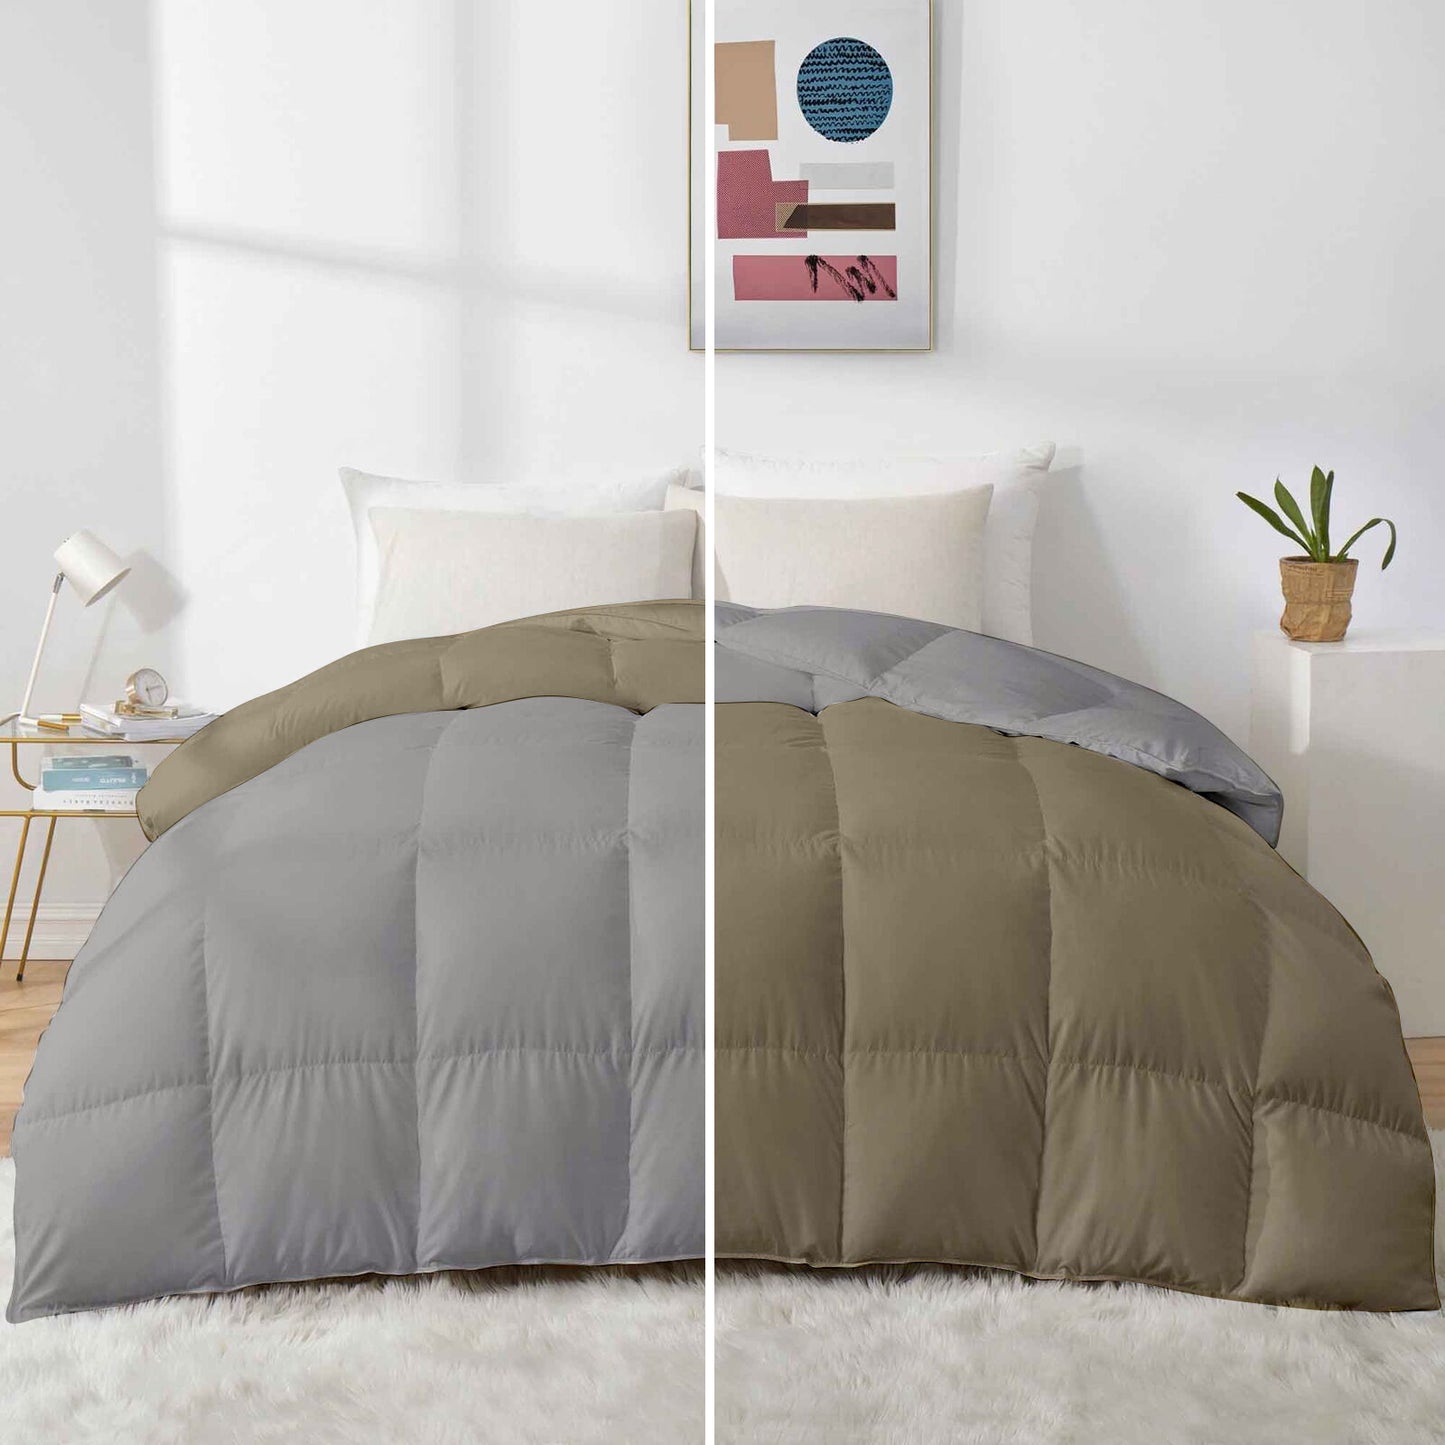 Razzai - 500 GSM Soft Hotel Quality-Down Alternative Reversible Comforter/Microfiber Quilt Blanket |Silver/Chocolate Brown